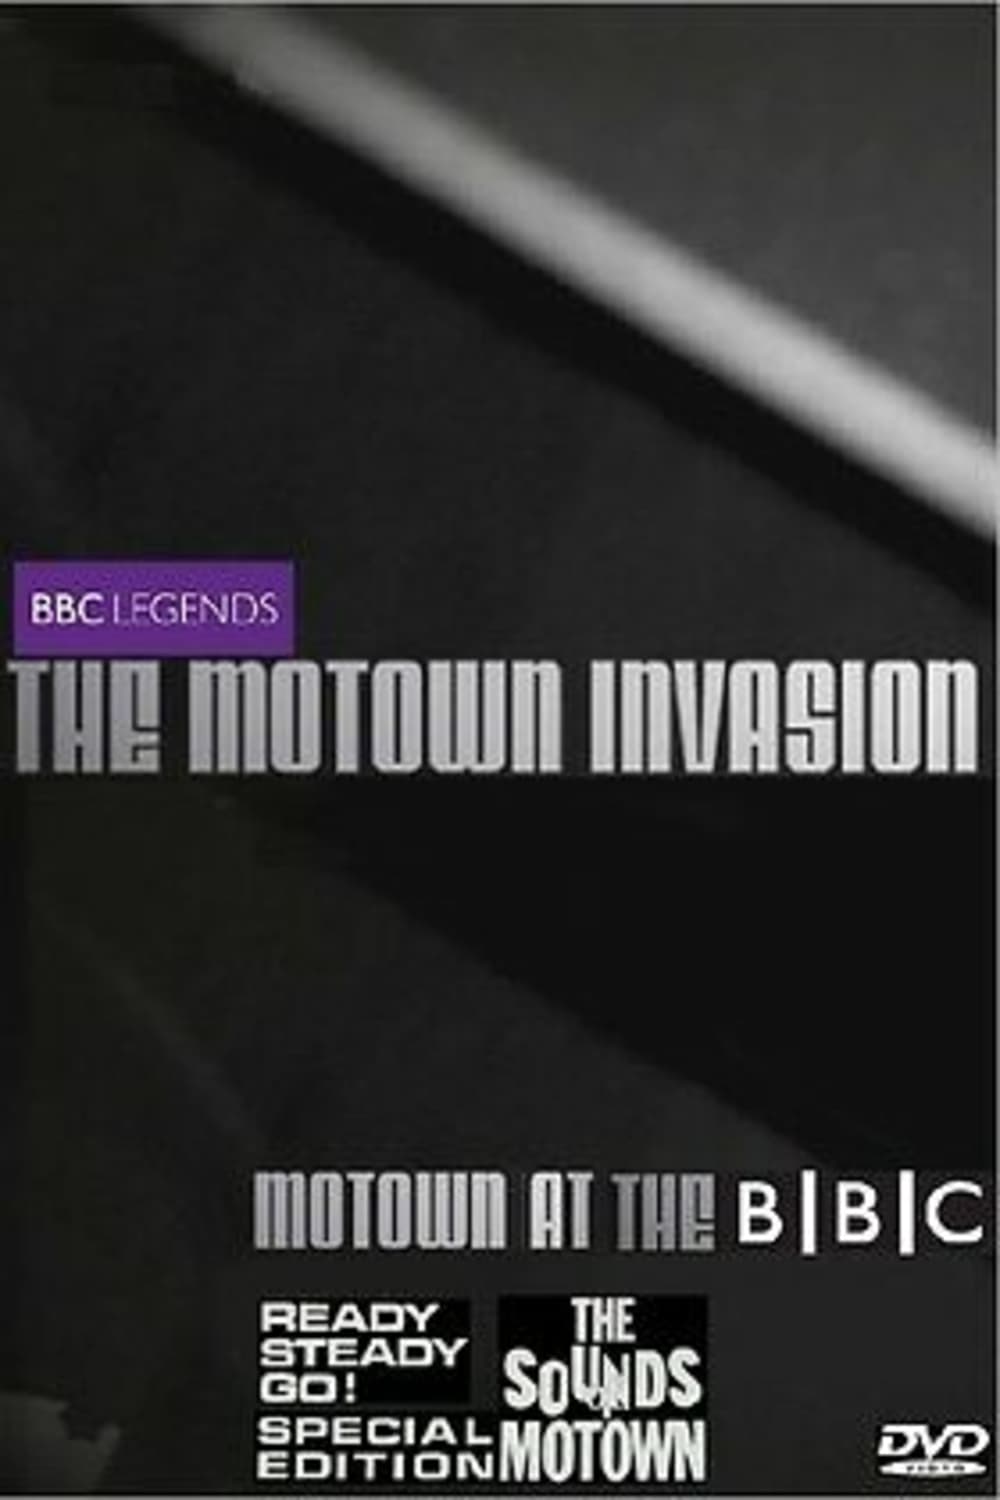 The Motown Invasion